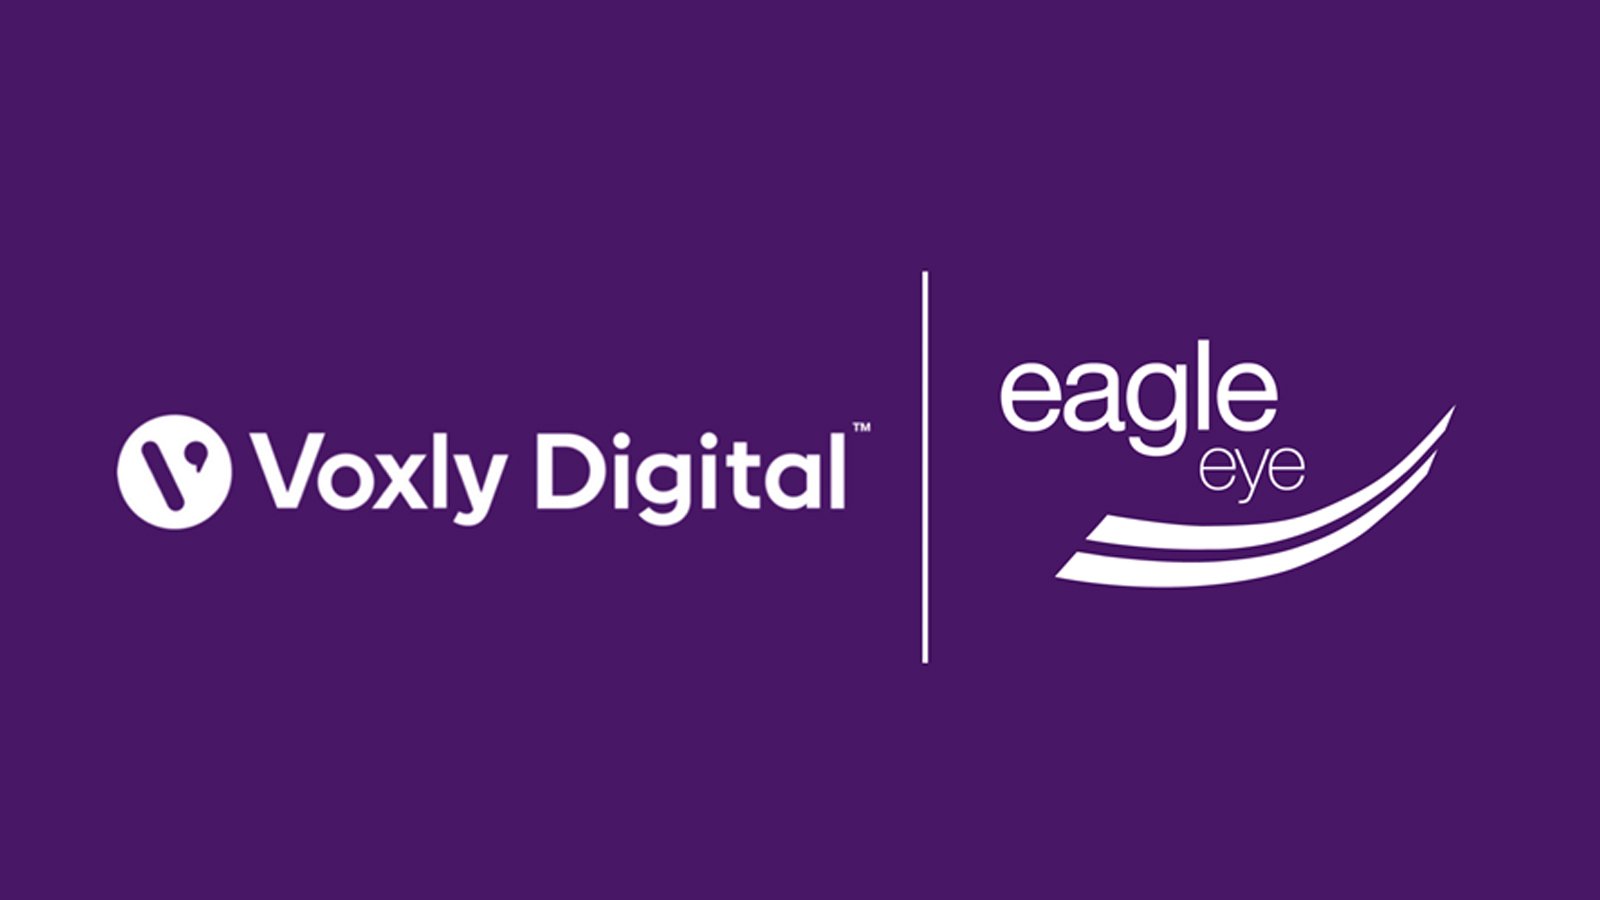 Eagle Eye and Voxly Digital